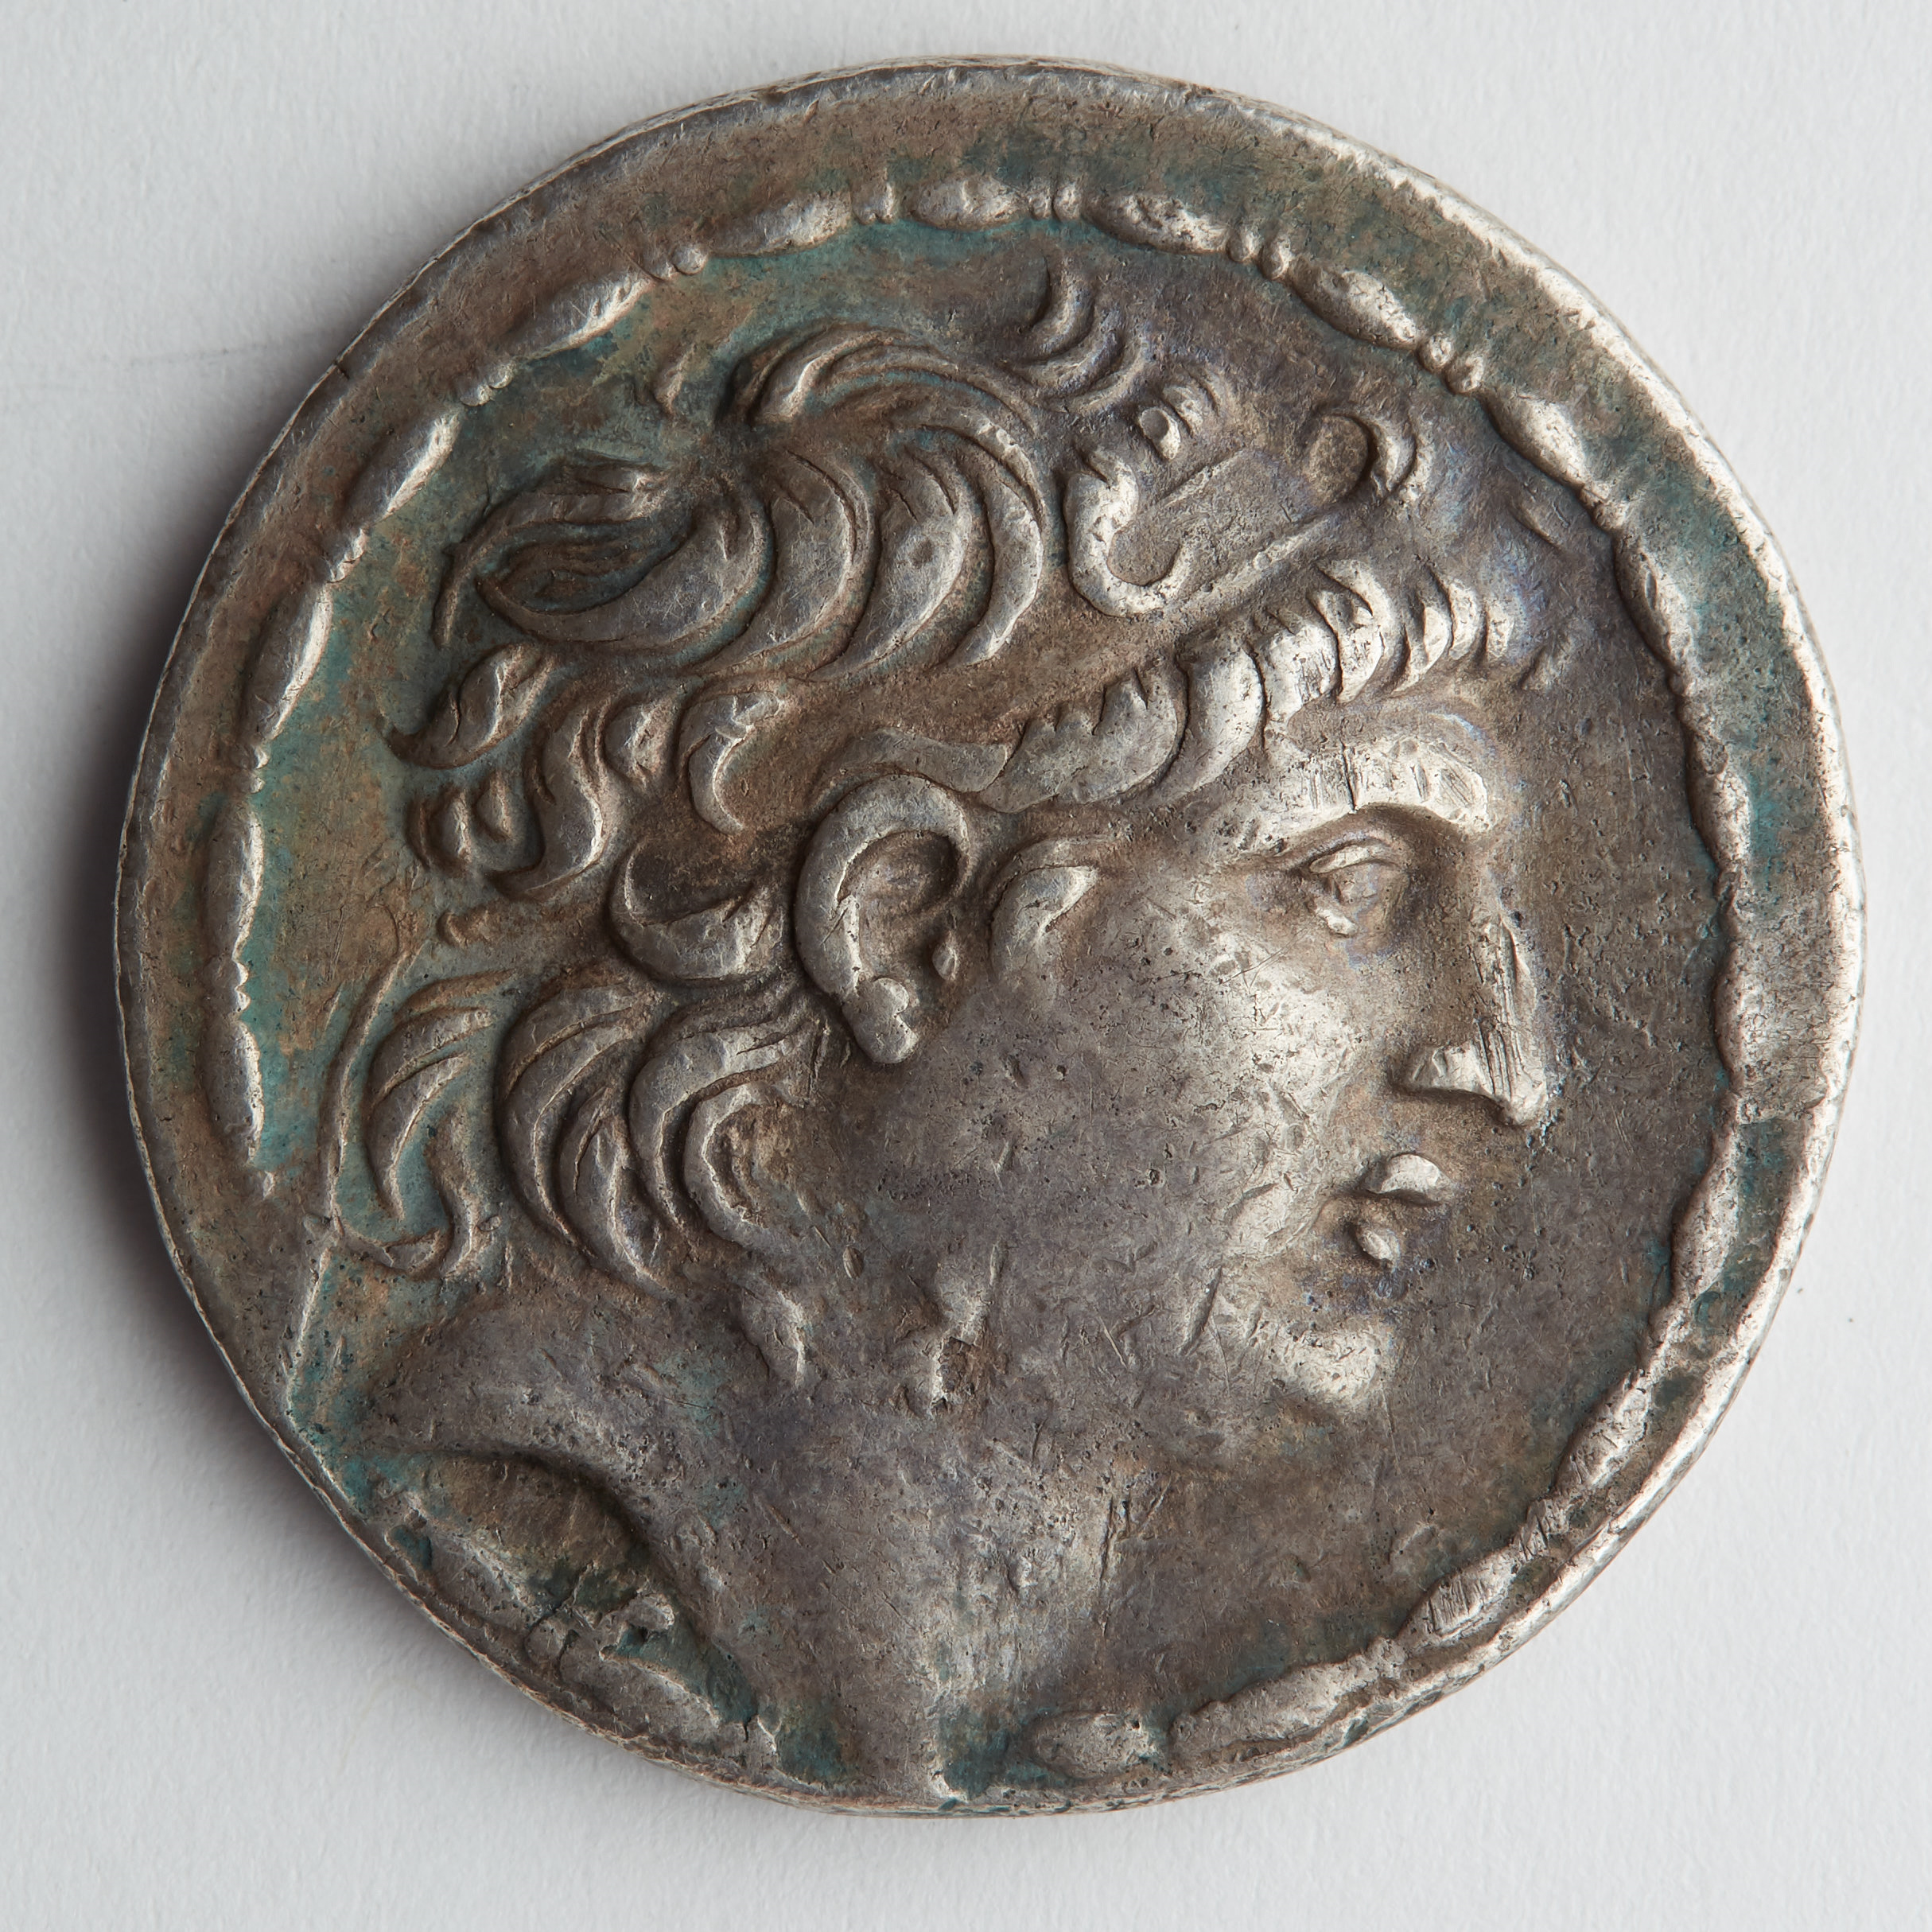 Lot 201: Ancient Greek Coin - Demetrios I